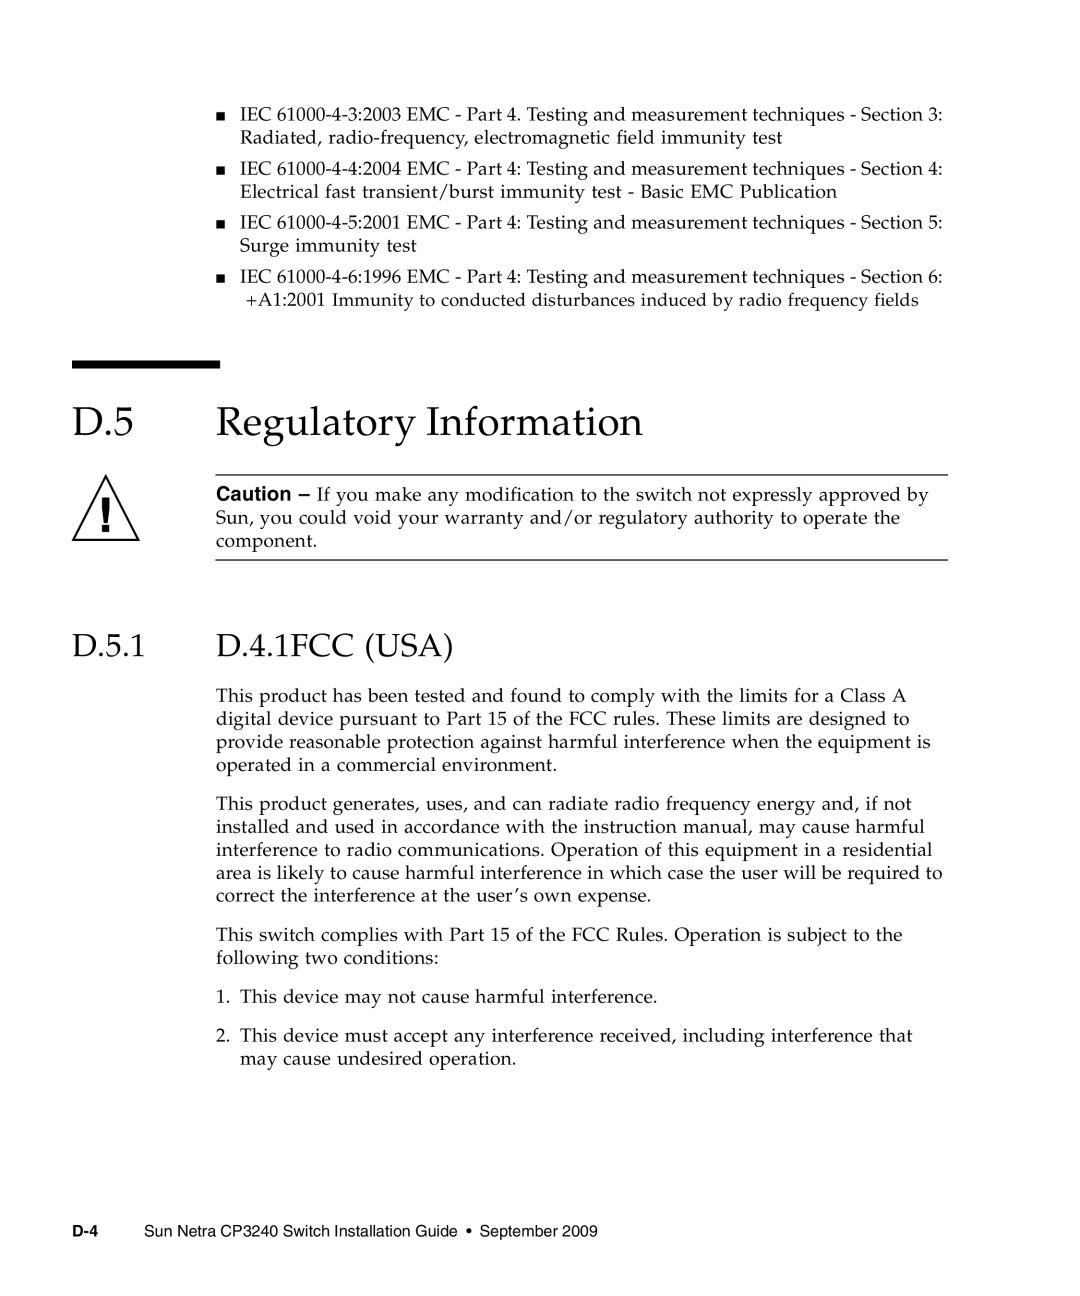 Sun Microsystems CP3240 manual D.5 Regulatory Information, D.5.1 D.4.1FCC USA 